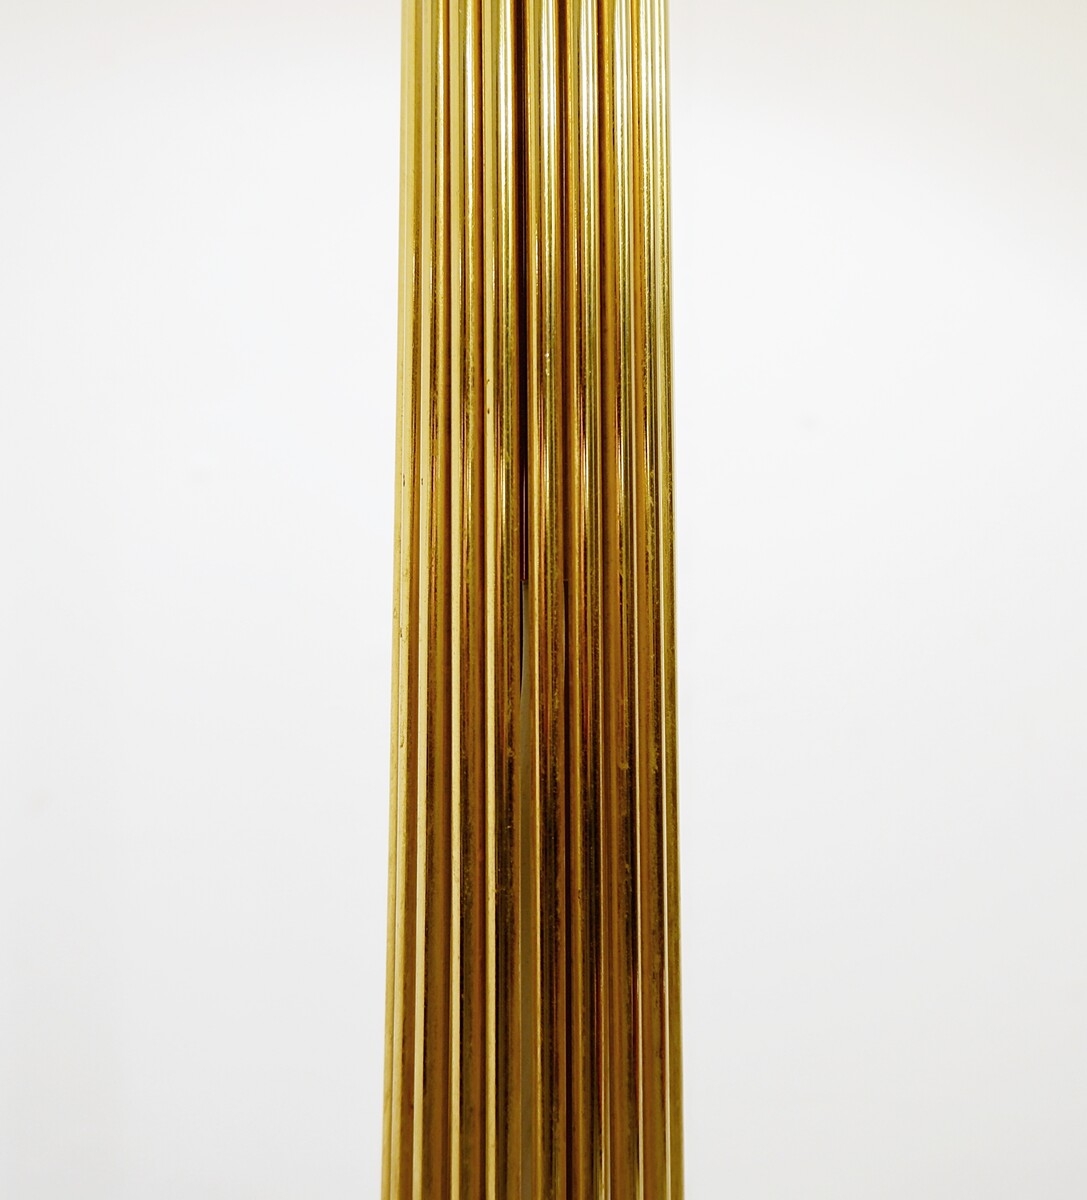 Mid Century Modern Floor Lamp by Verner Panton for Fritz Hansen - 2 available